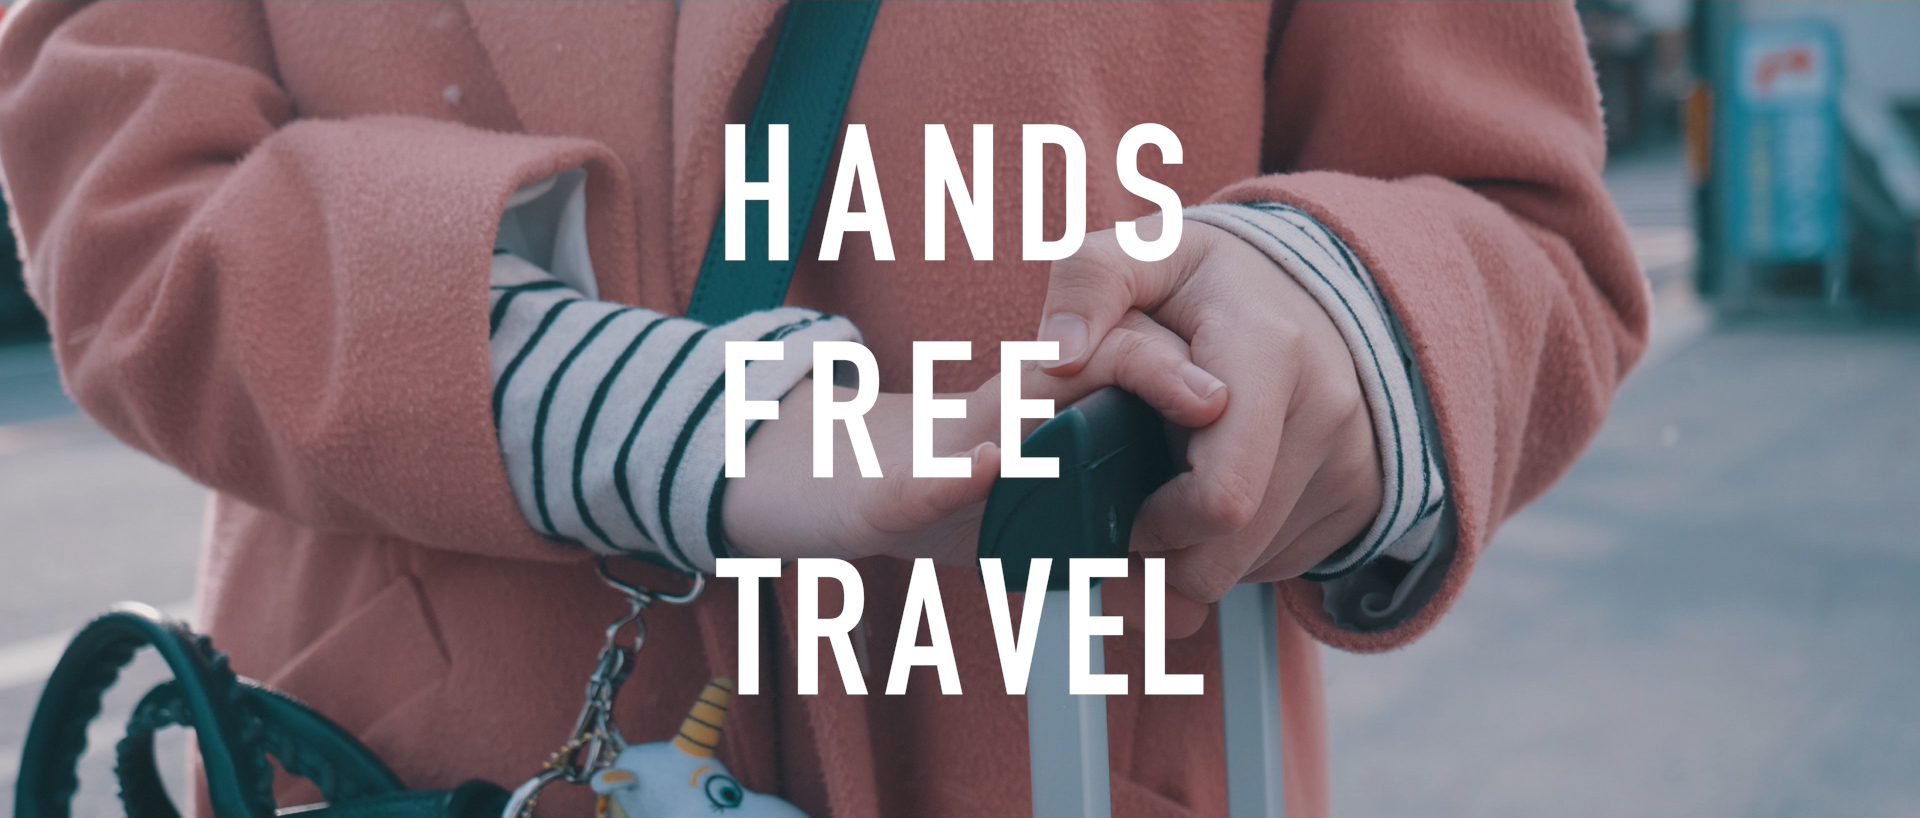 HANDS FREE TRAVEL02